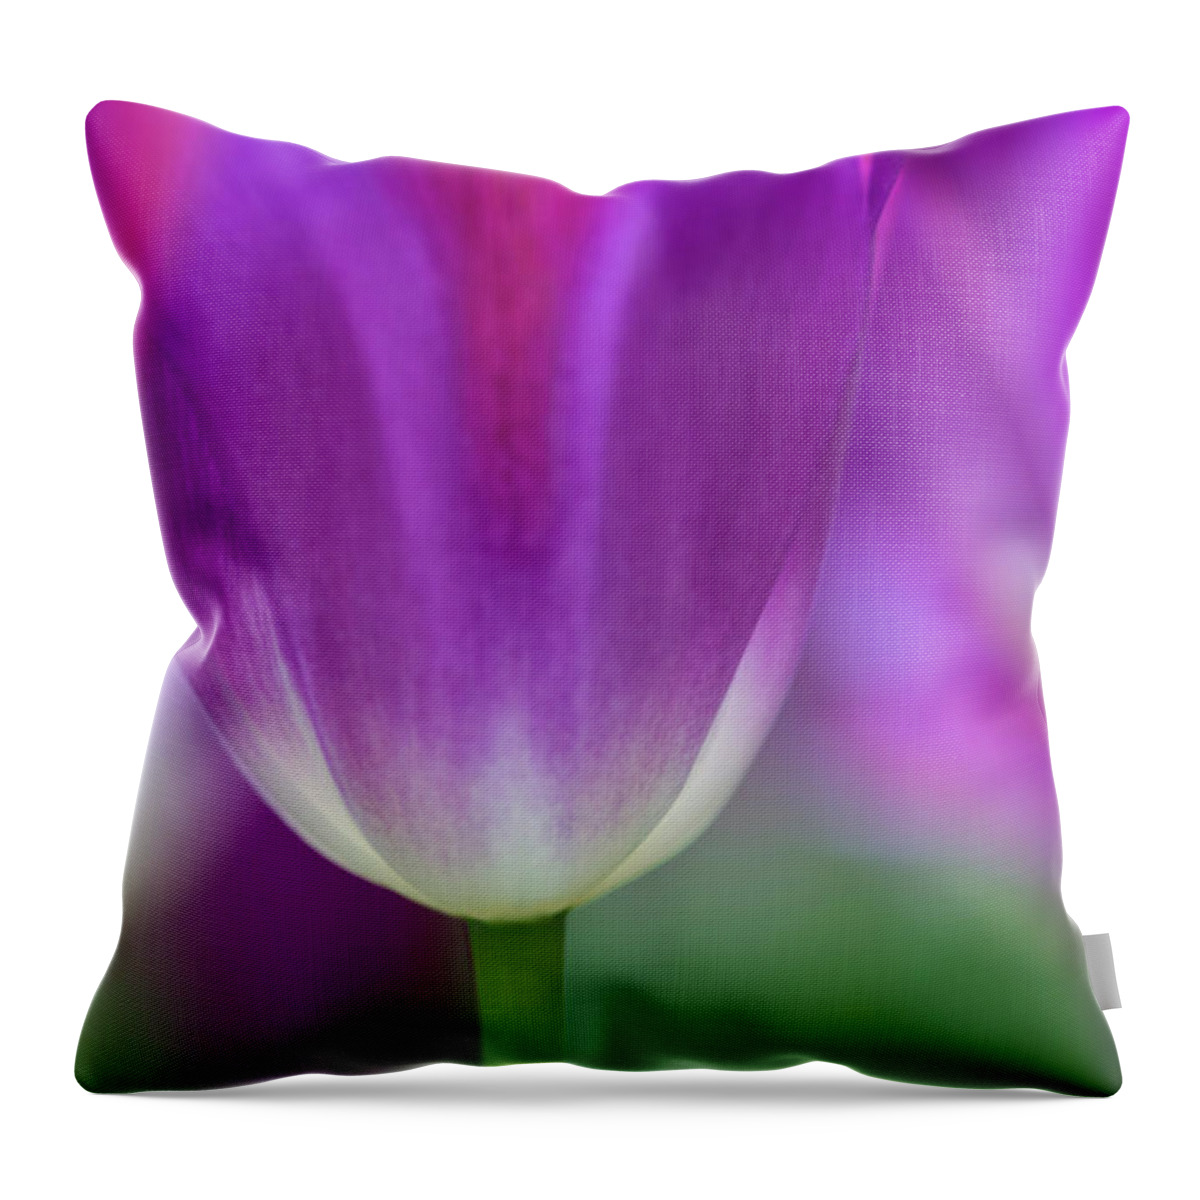 Purple Throw Pillow featuring the photograph Selective Focus On Tulip Kuekenhof by Darrell Gulin